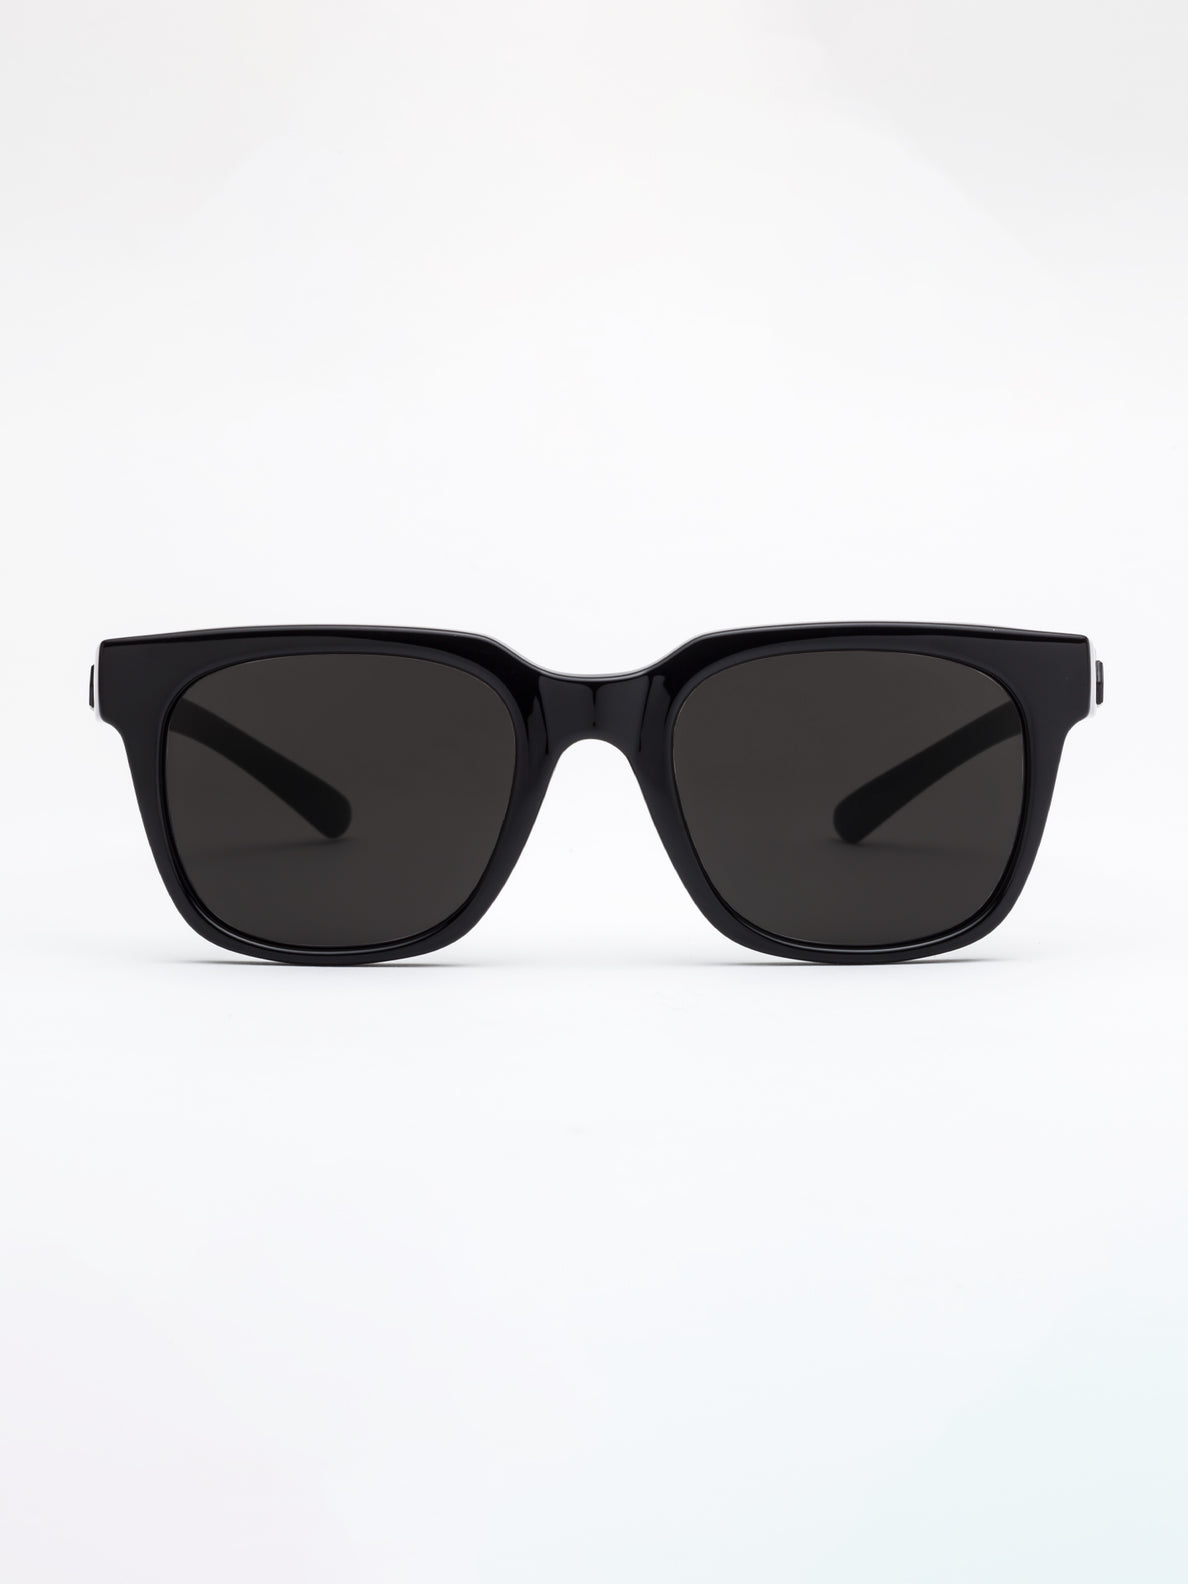 Morph Sunglasses - Gloss Black Grey